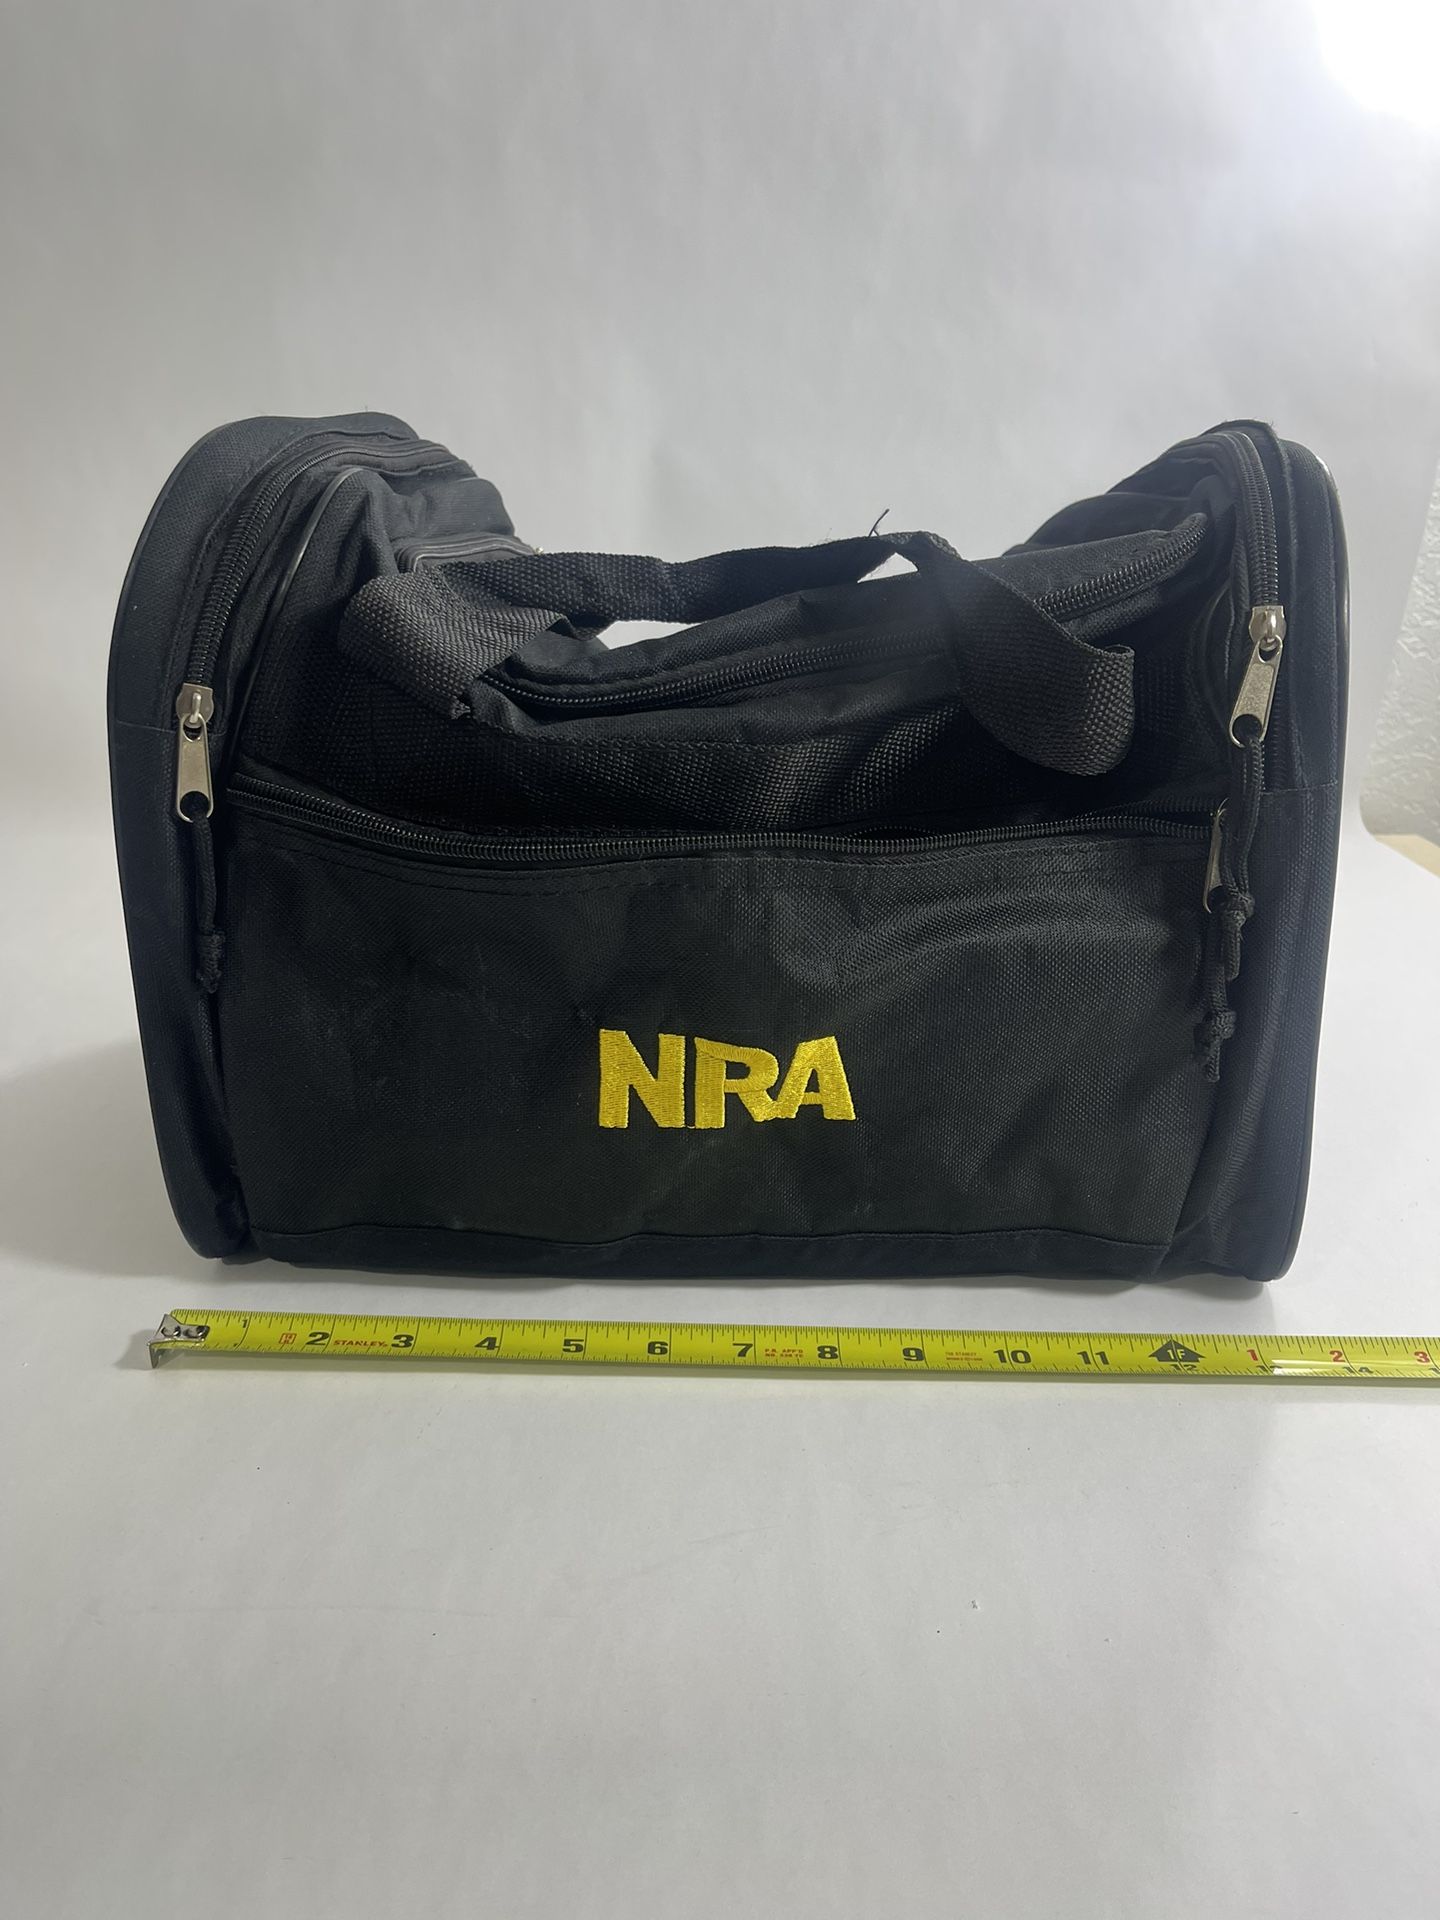 NRA Black  Duffle Bag 14” × 10” × 9” Overnight Travel Weekend Duffel